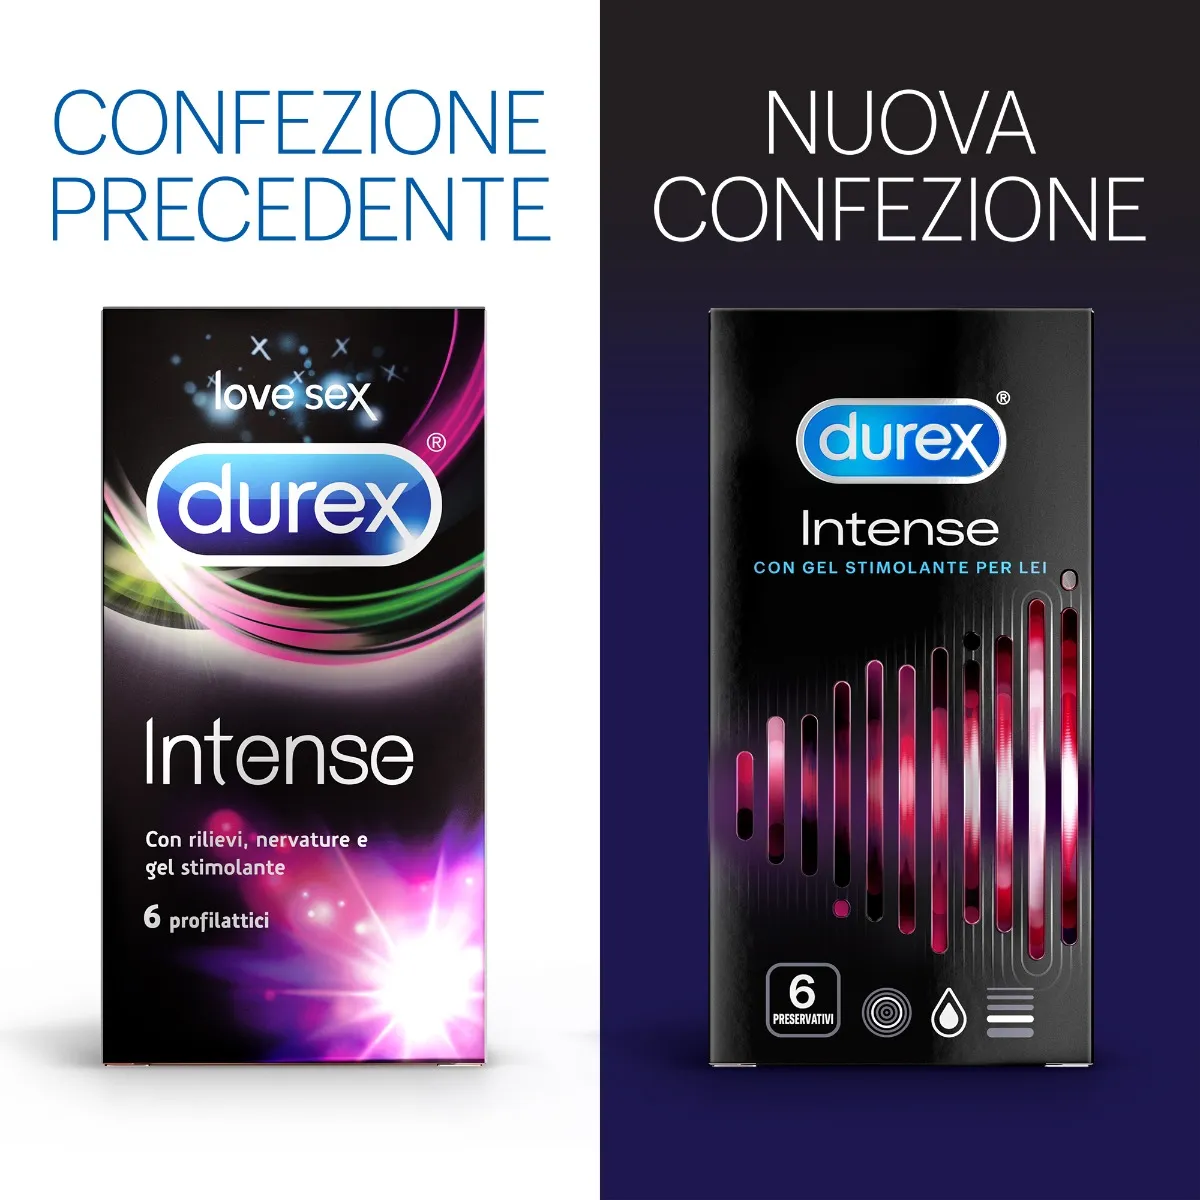 Durex Intense Preservativi 6 Pezzi Con Rilievi e Nervature Stimolanti